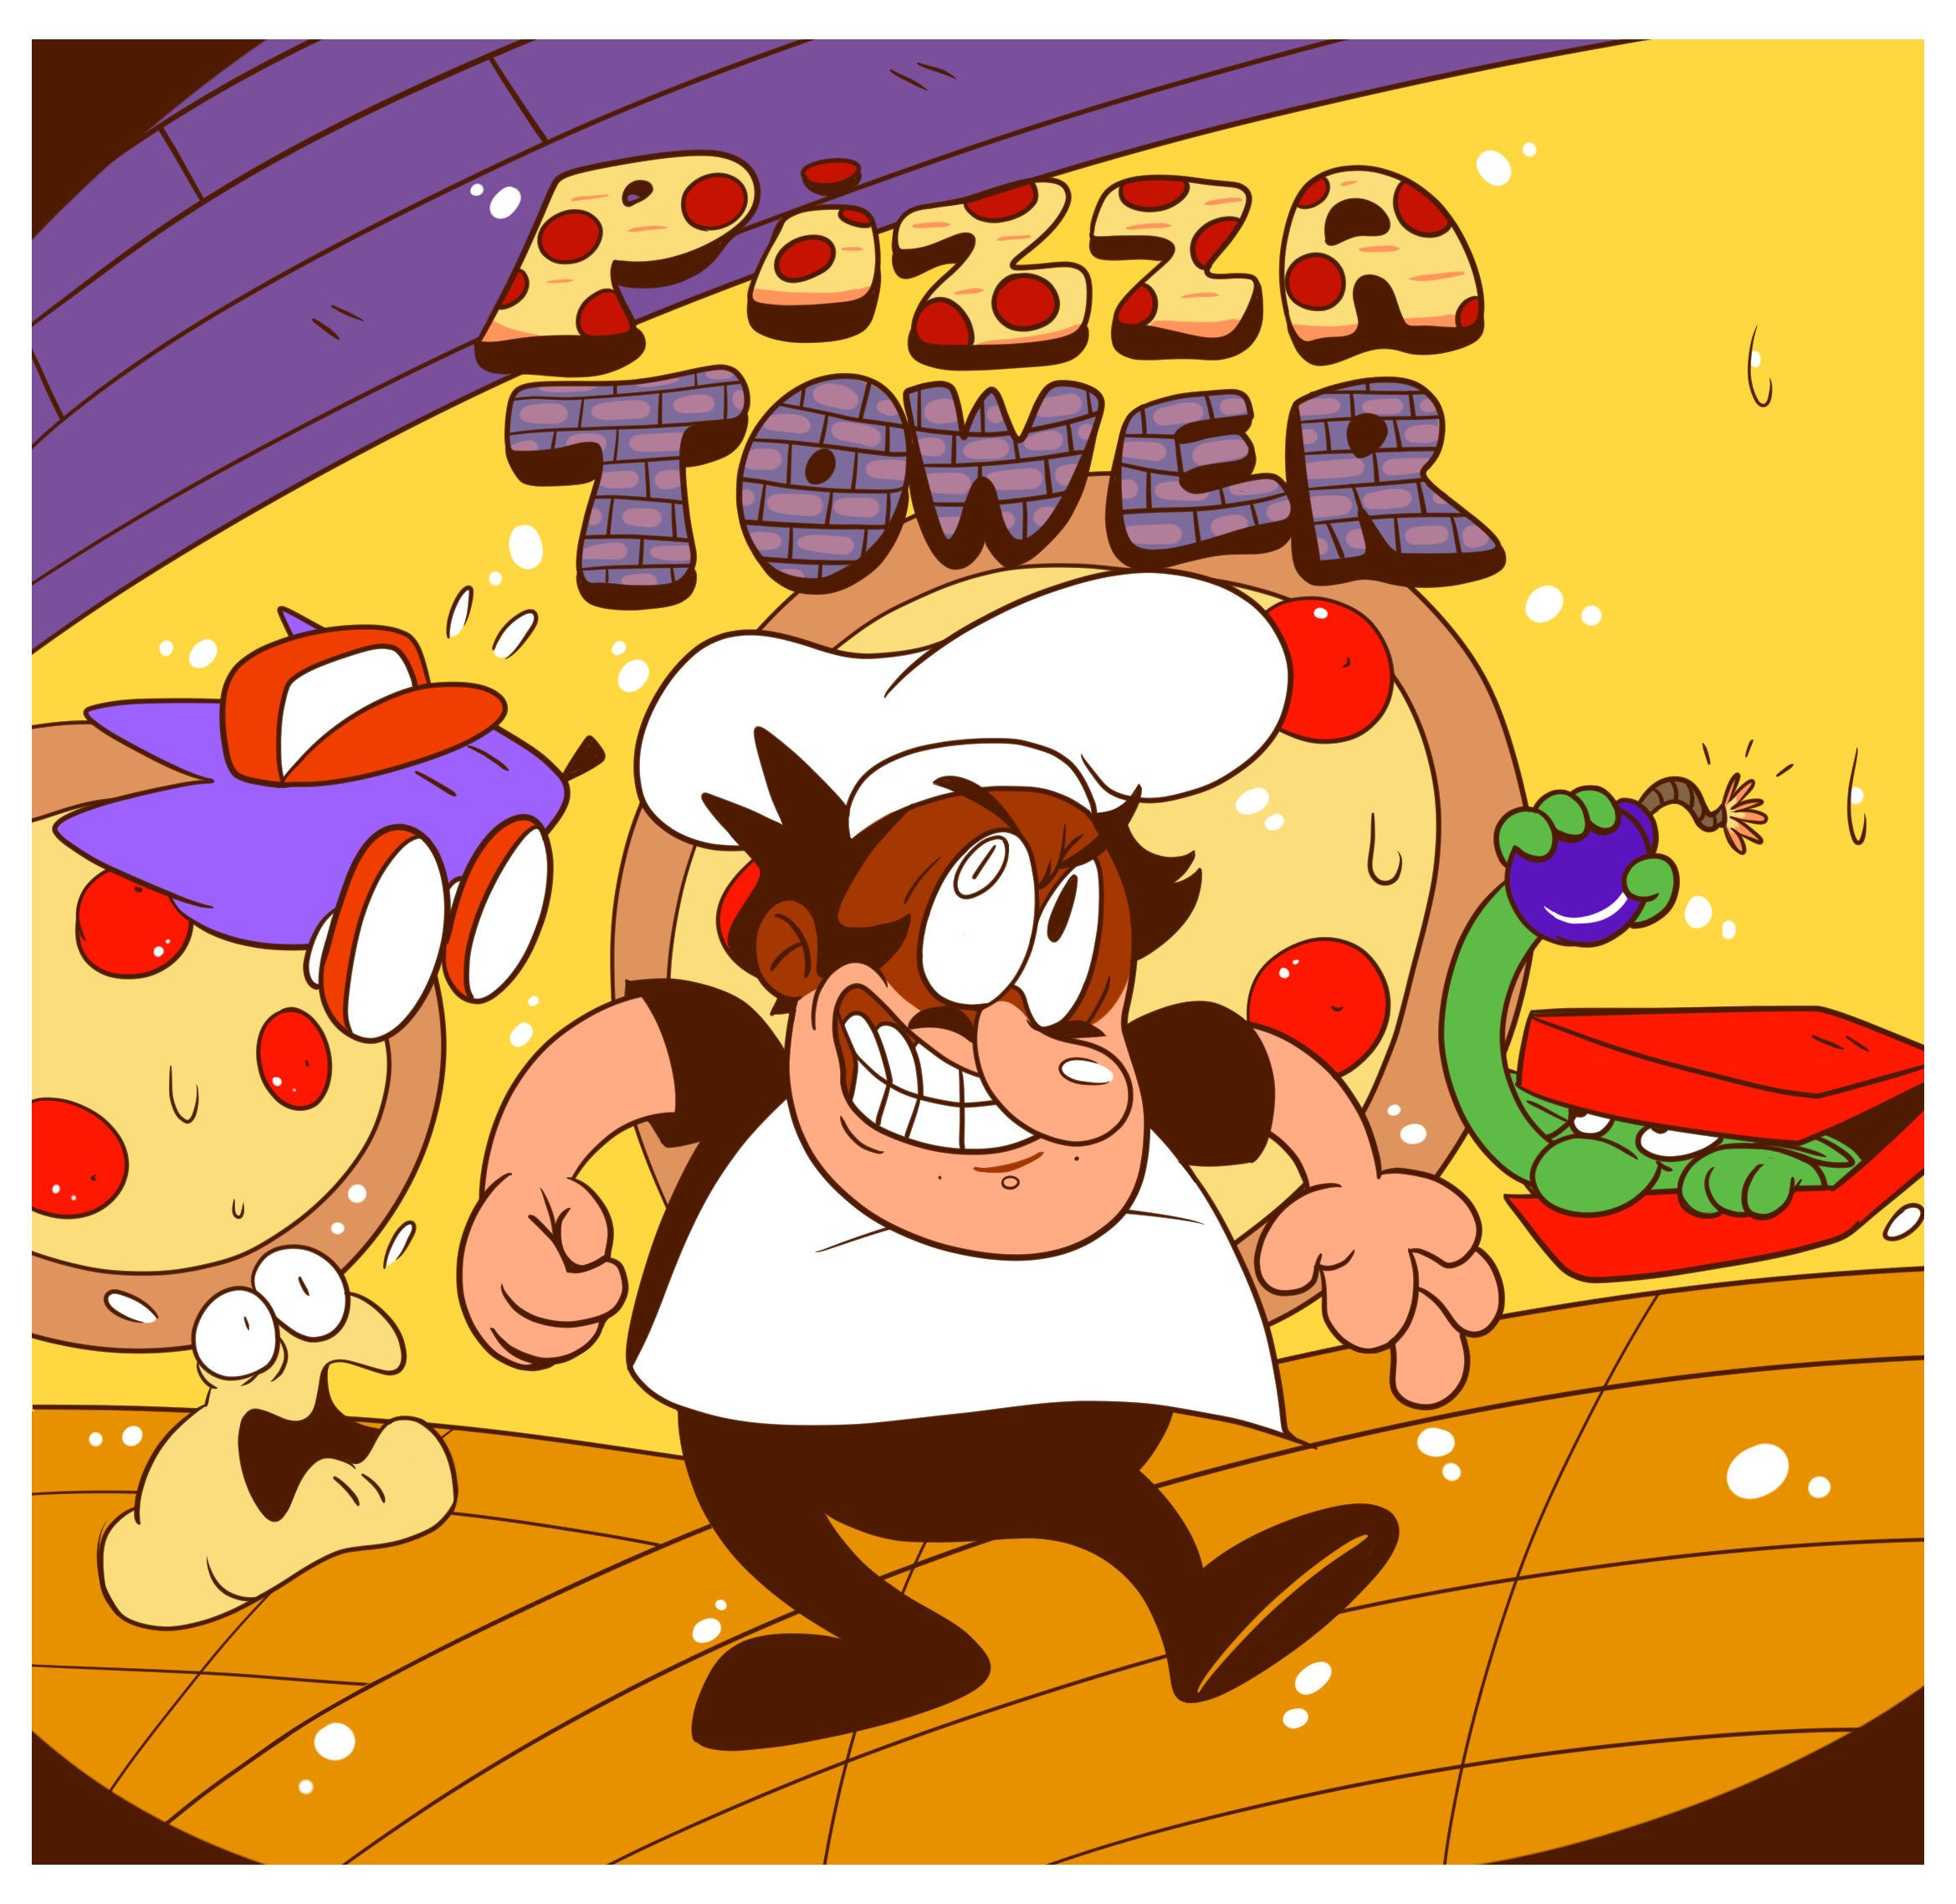 Пеппино pizza Tower. Pizza Tower игра. Snick pizza Tower. Peppino pizza Tower taunts.